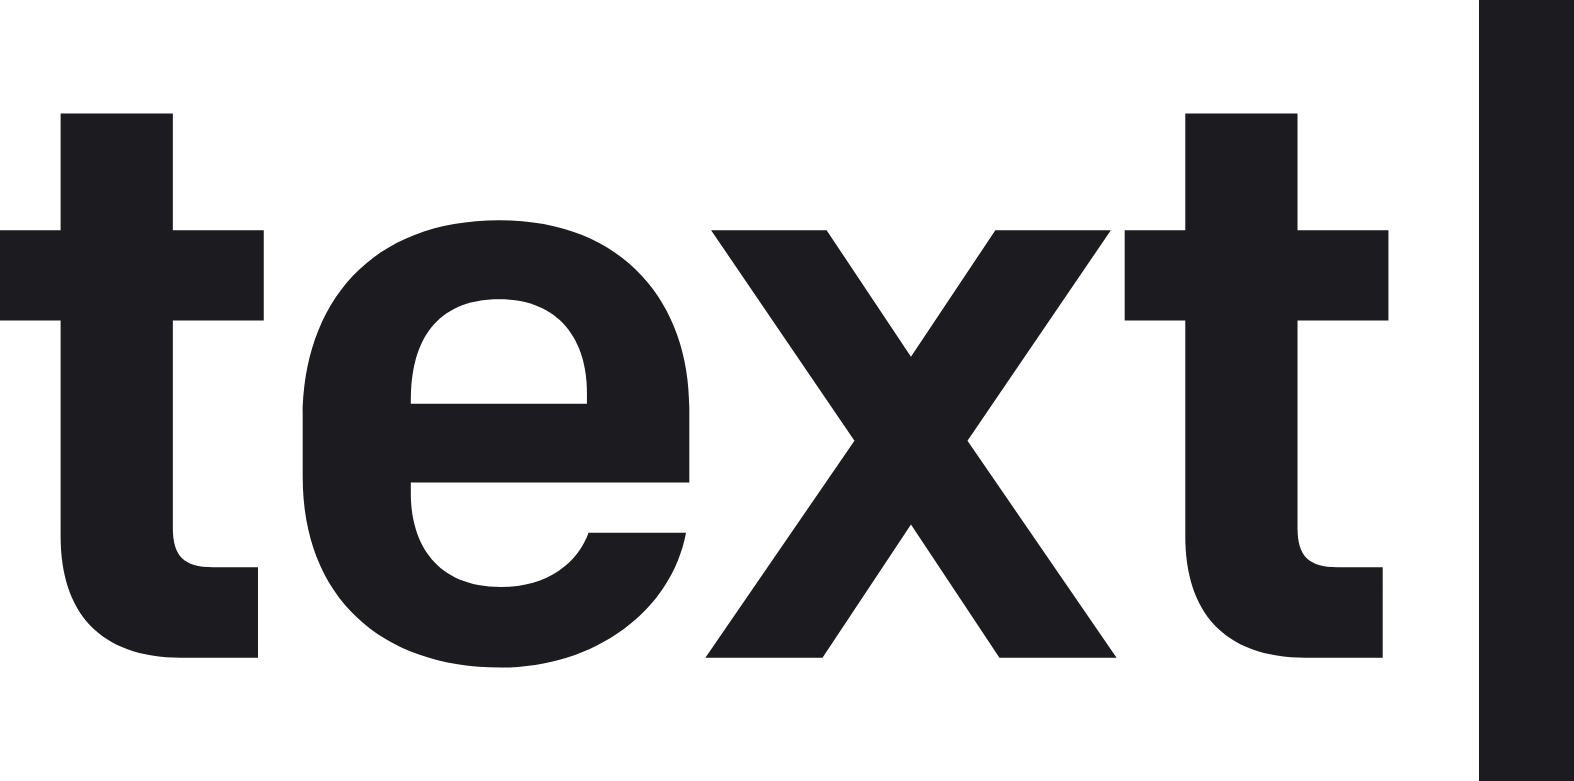 Text (LiveChat) logo large (transparent PNG)